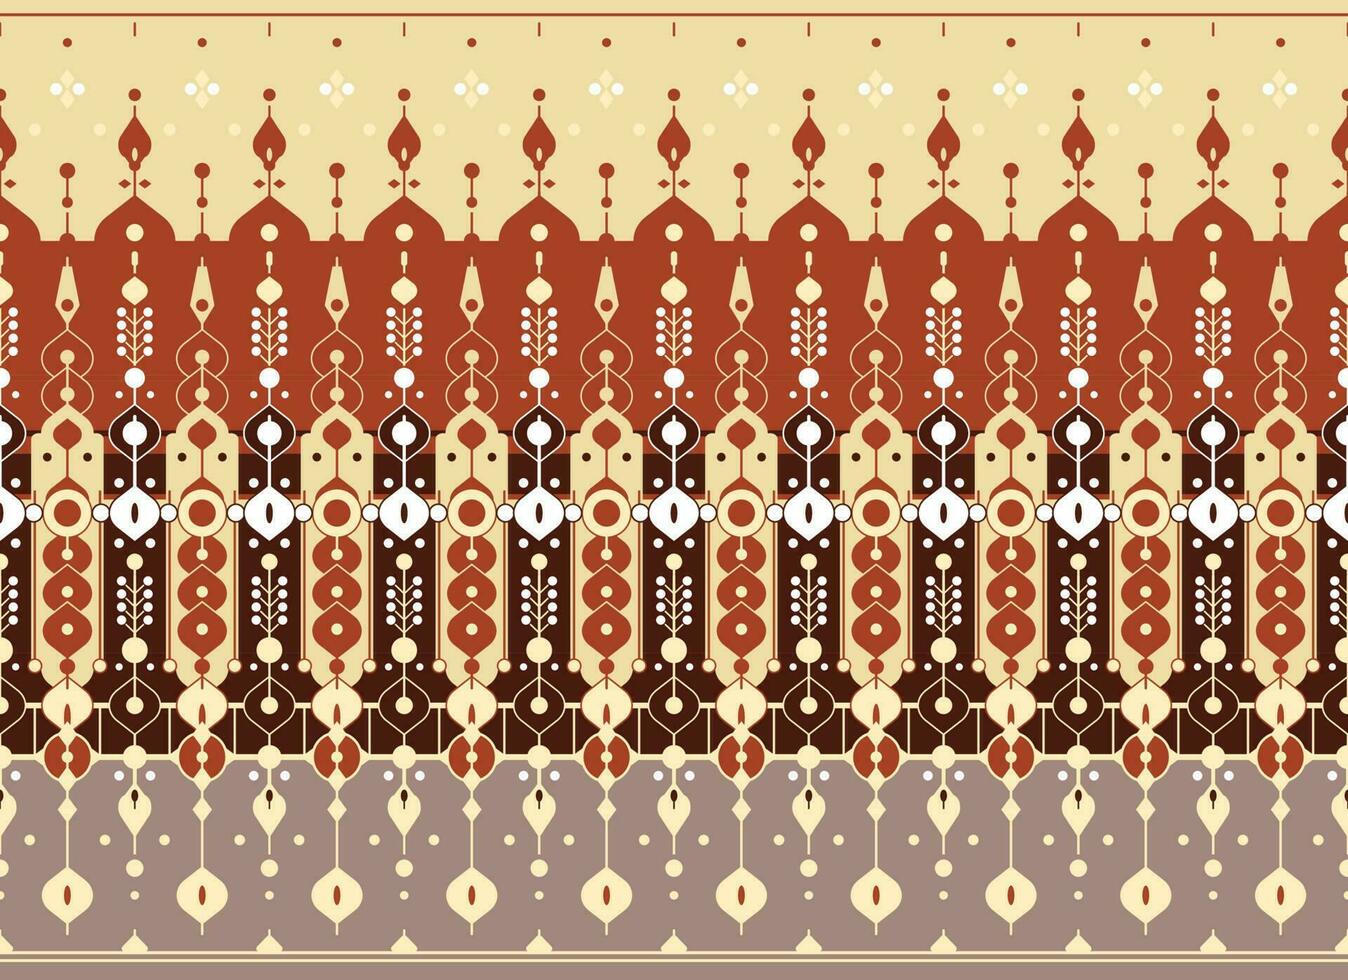 geometrisk etnisk tyg mönster för trasa matta tapet bakgrund omslag etc. vektor